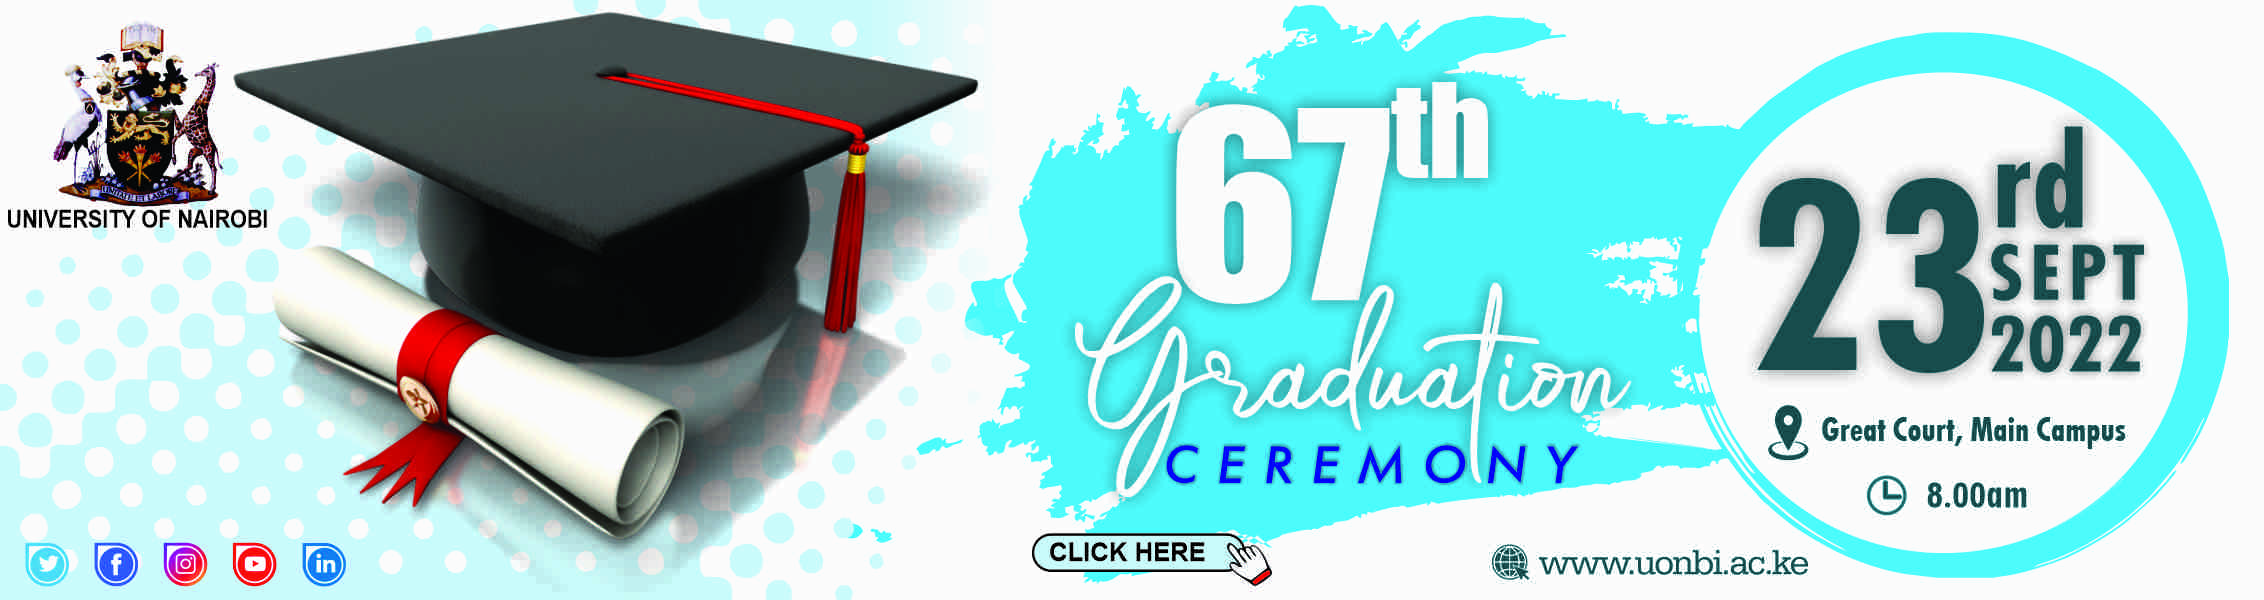 67th Graduation Ceremony